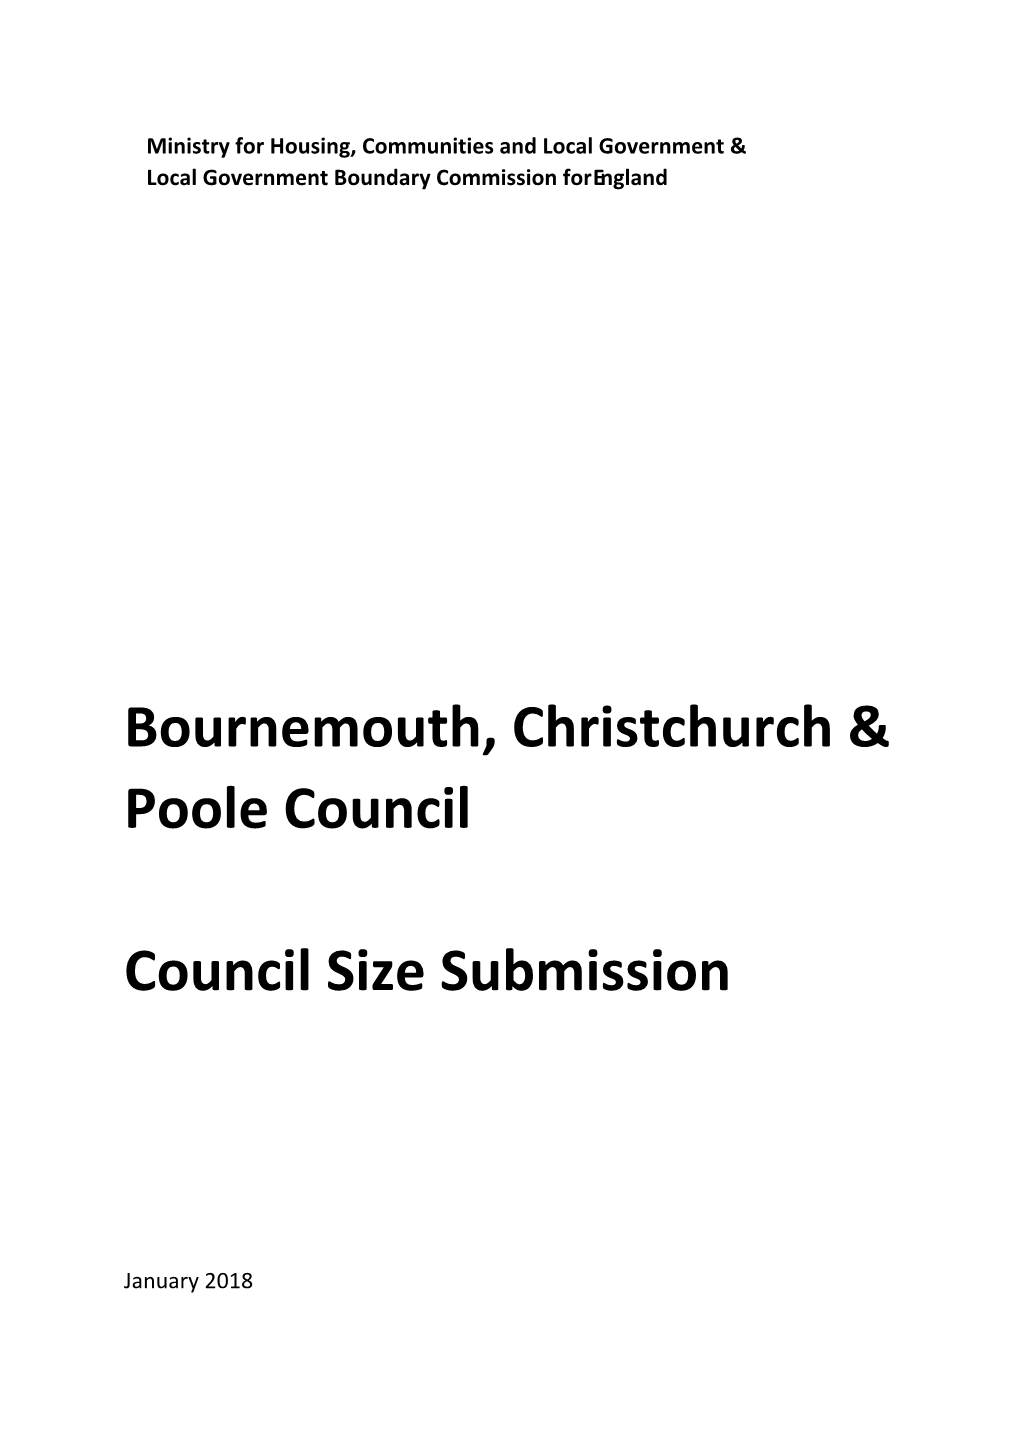 Bournemouth, Christchurch & Poole Council Council Size Submission